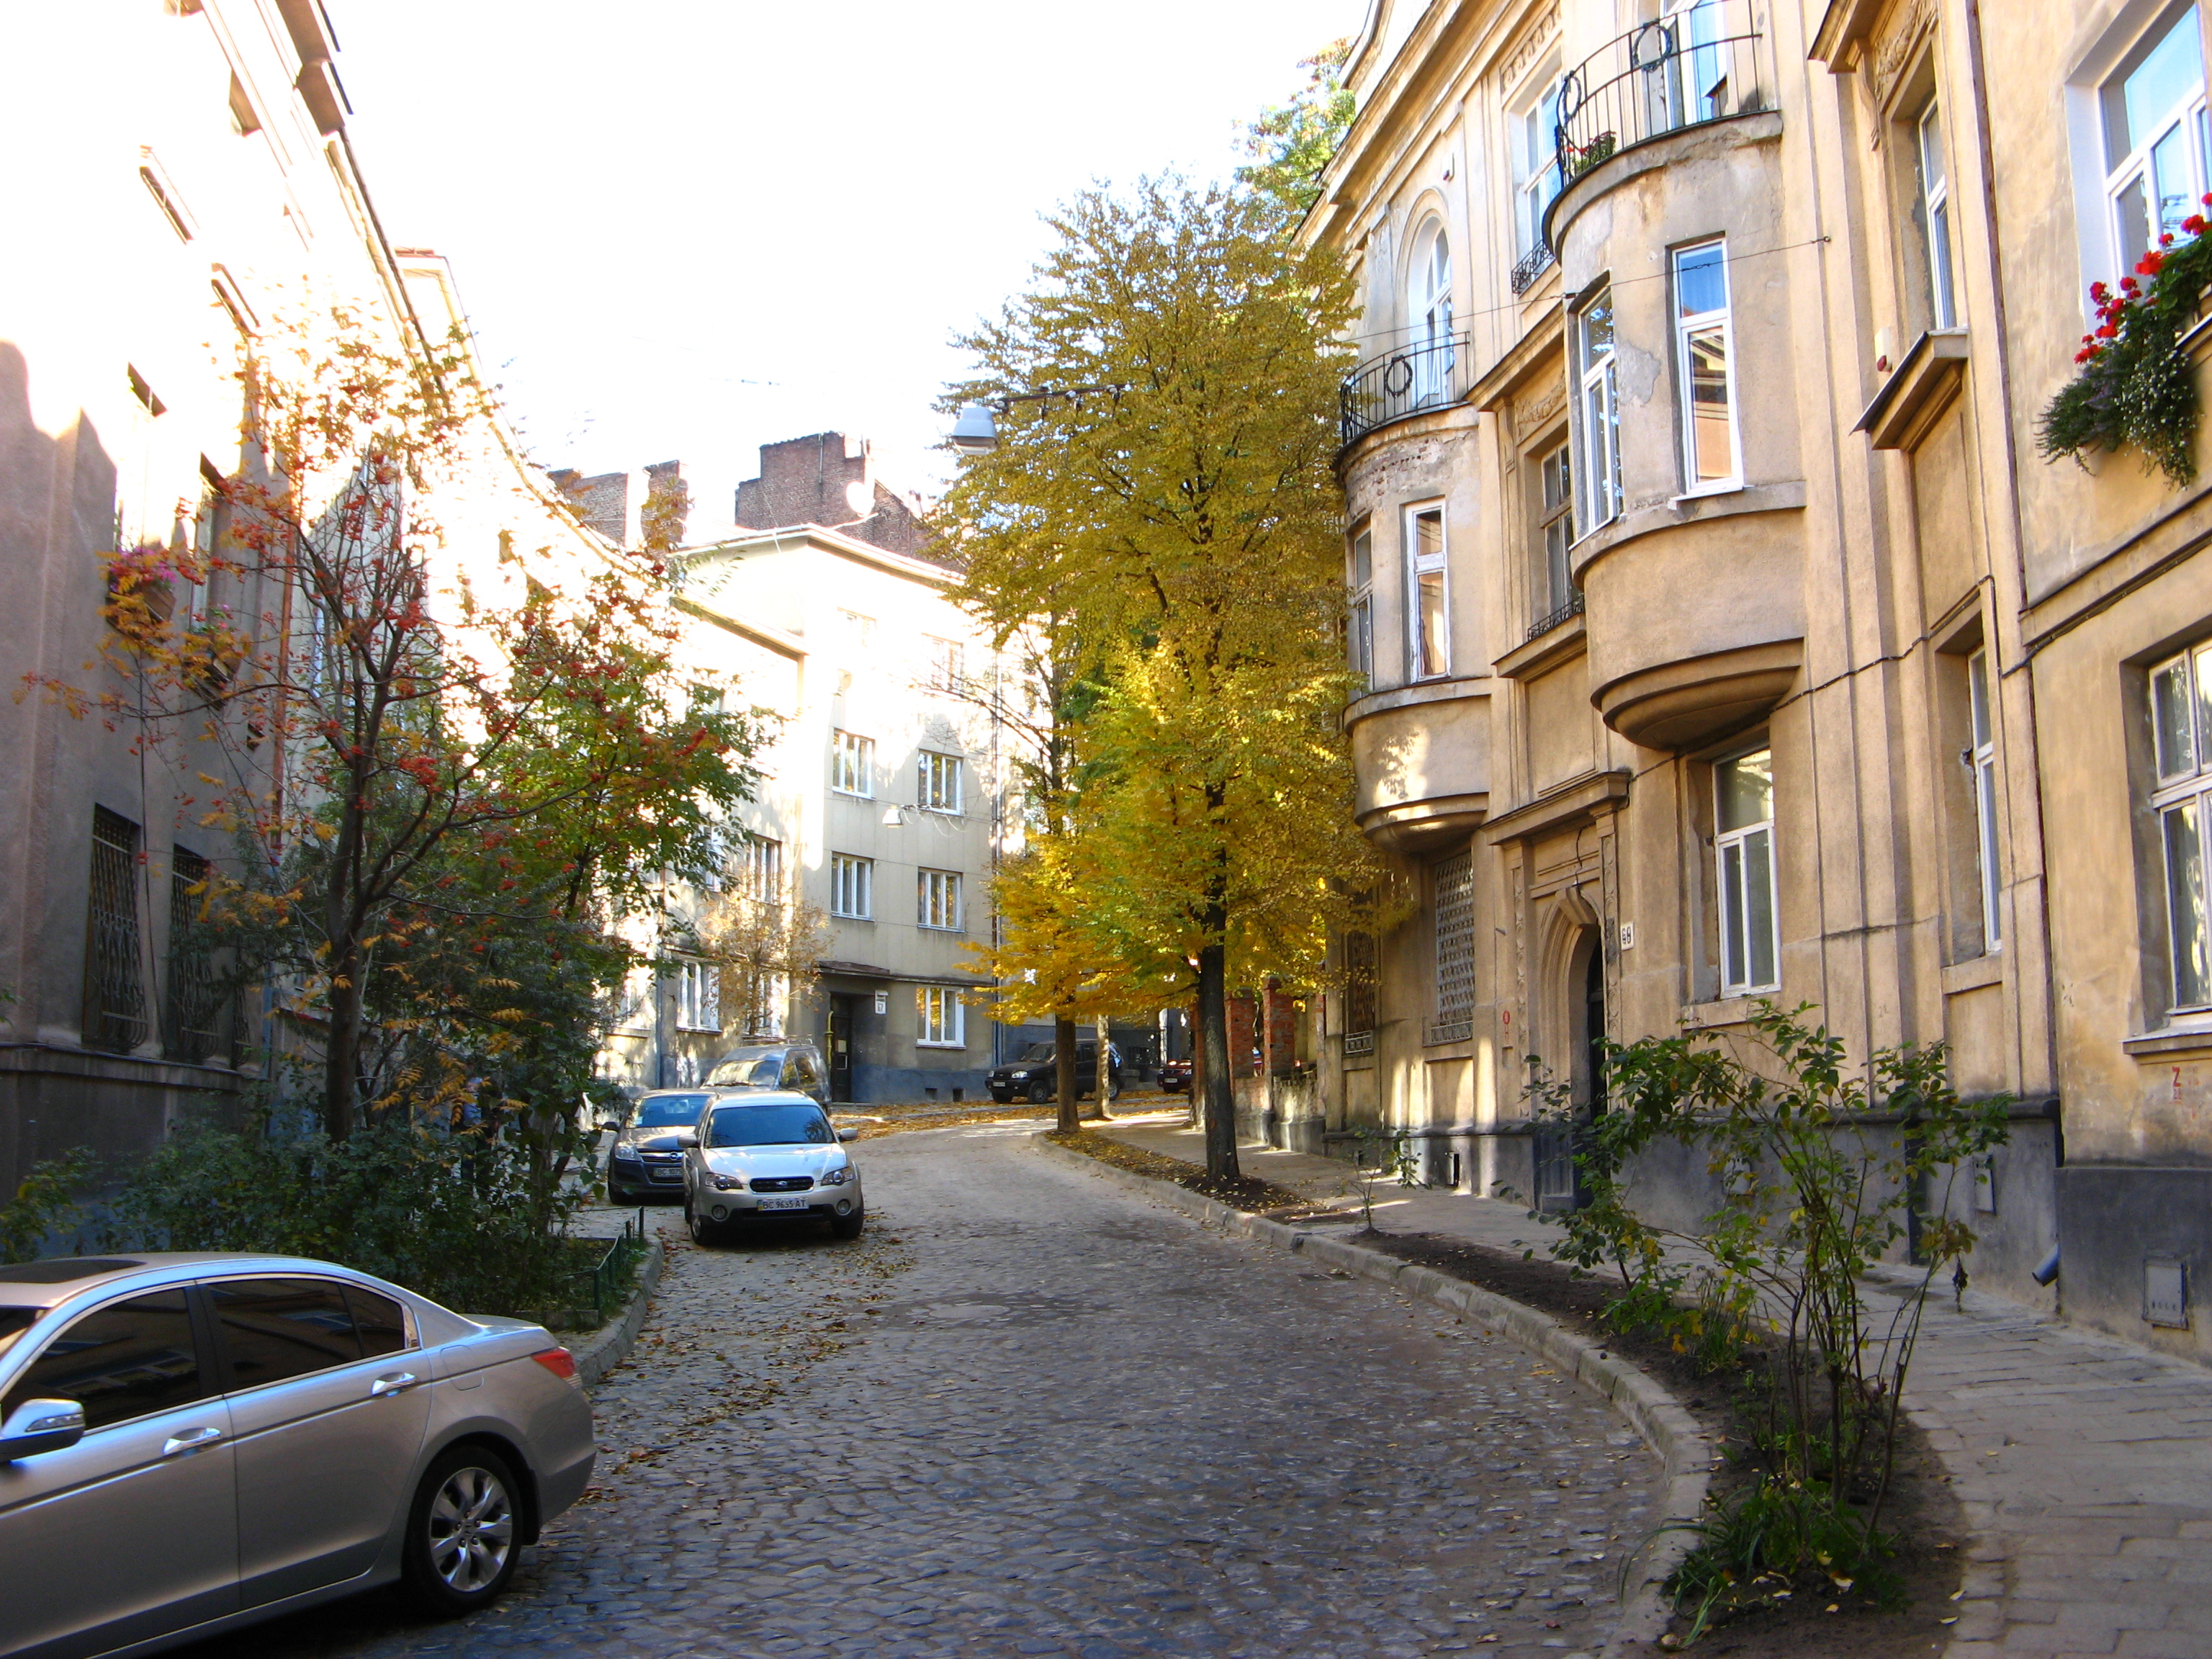 narrow street with buikdings and cars